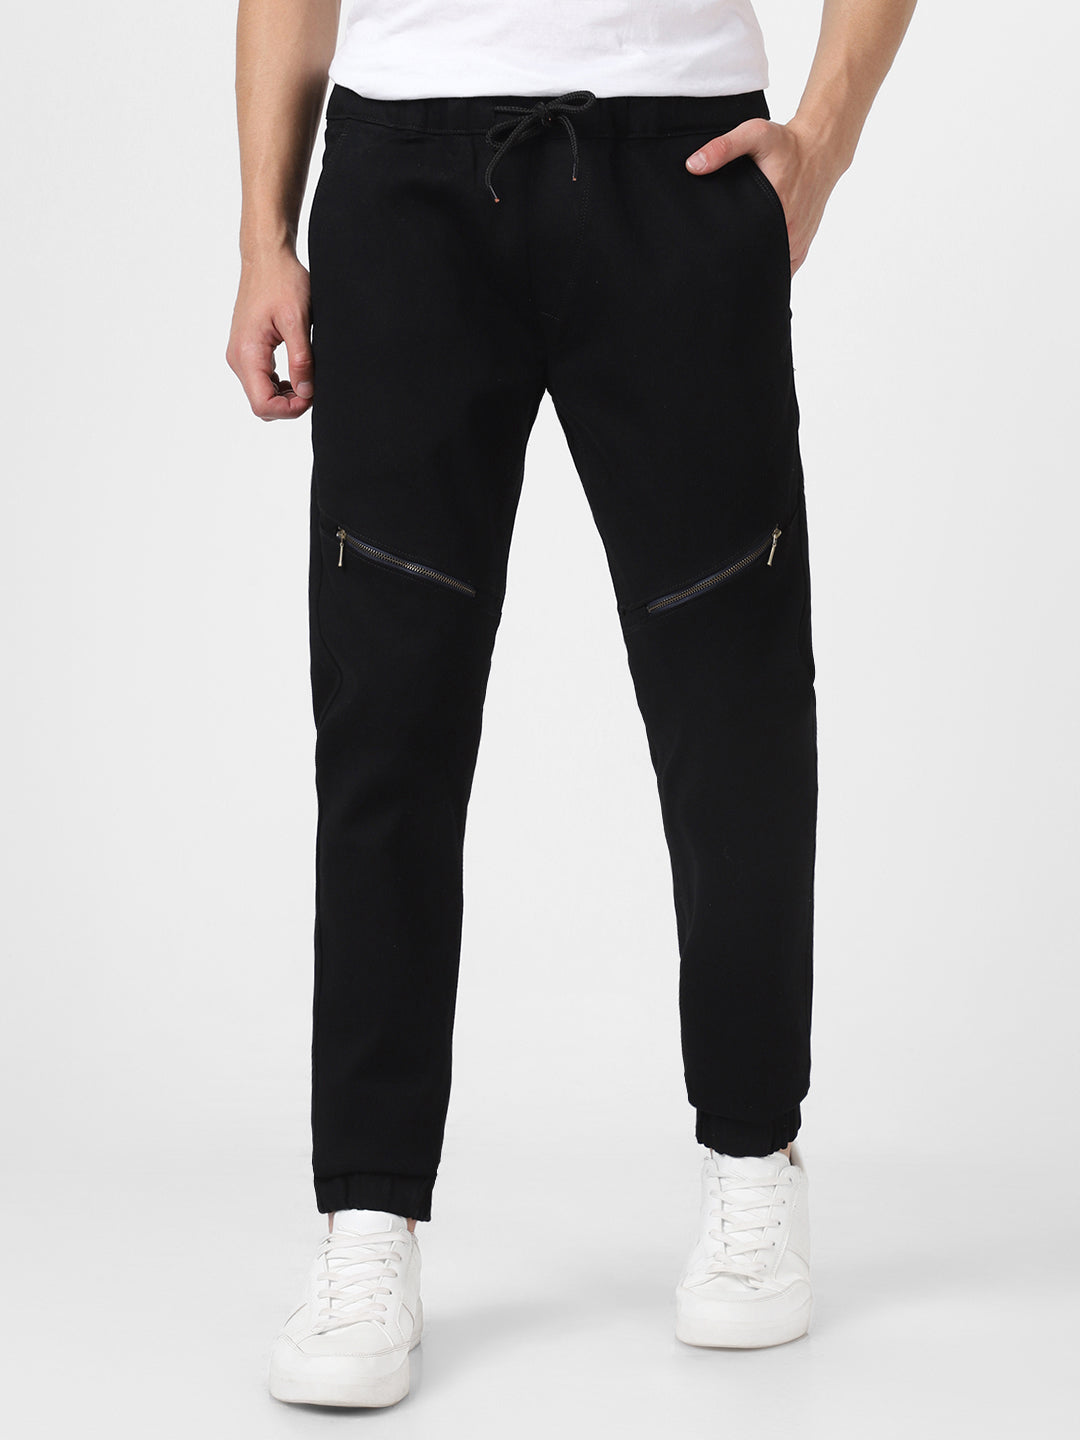 Men's Black Slim Fit Stretch Zippered Jogger Jeans